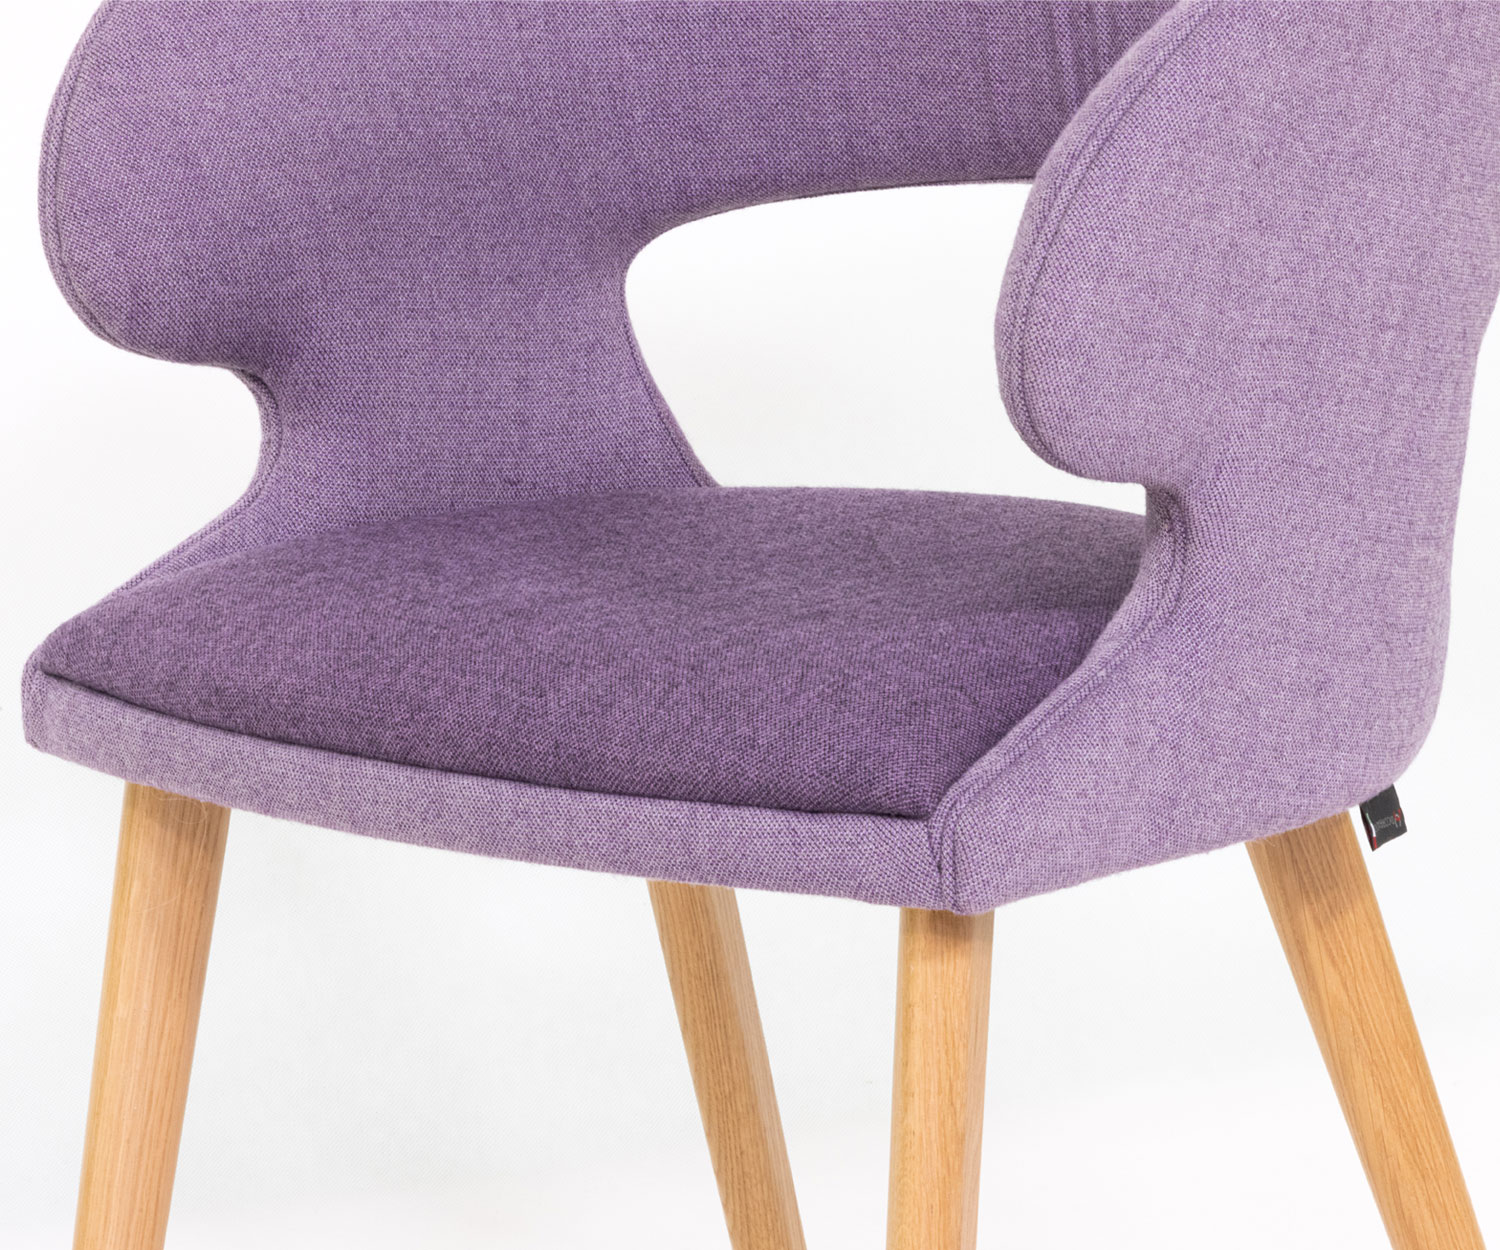 Siena Armchair by FHG, Australia's Furniture Manufacturer